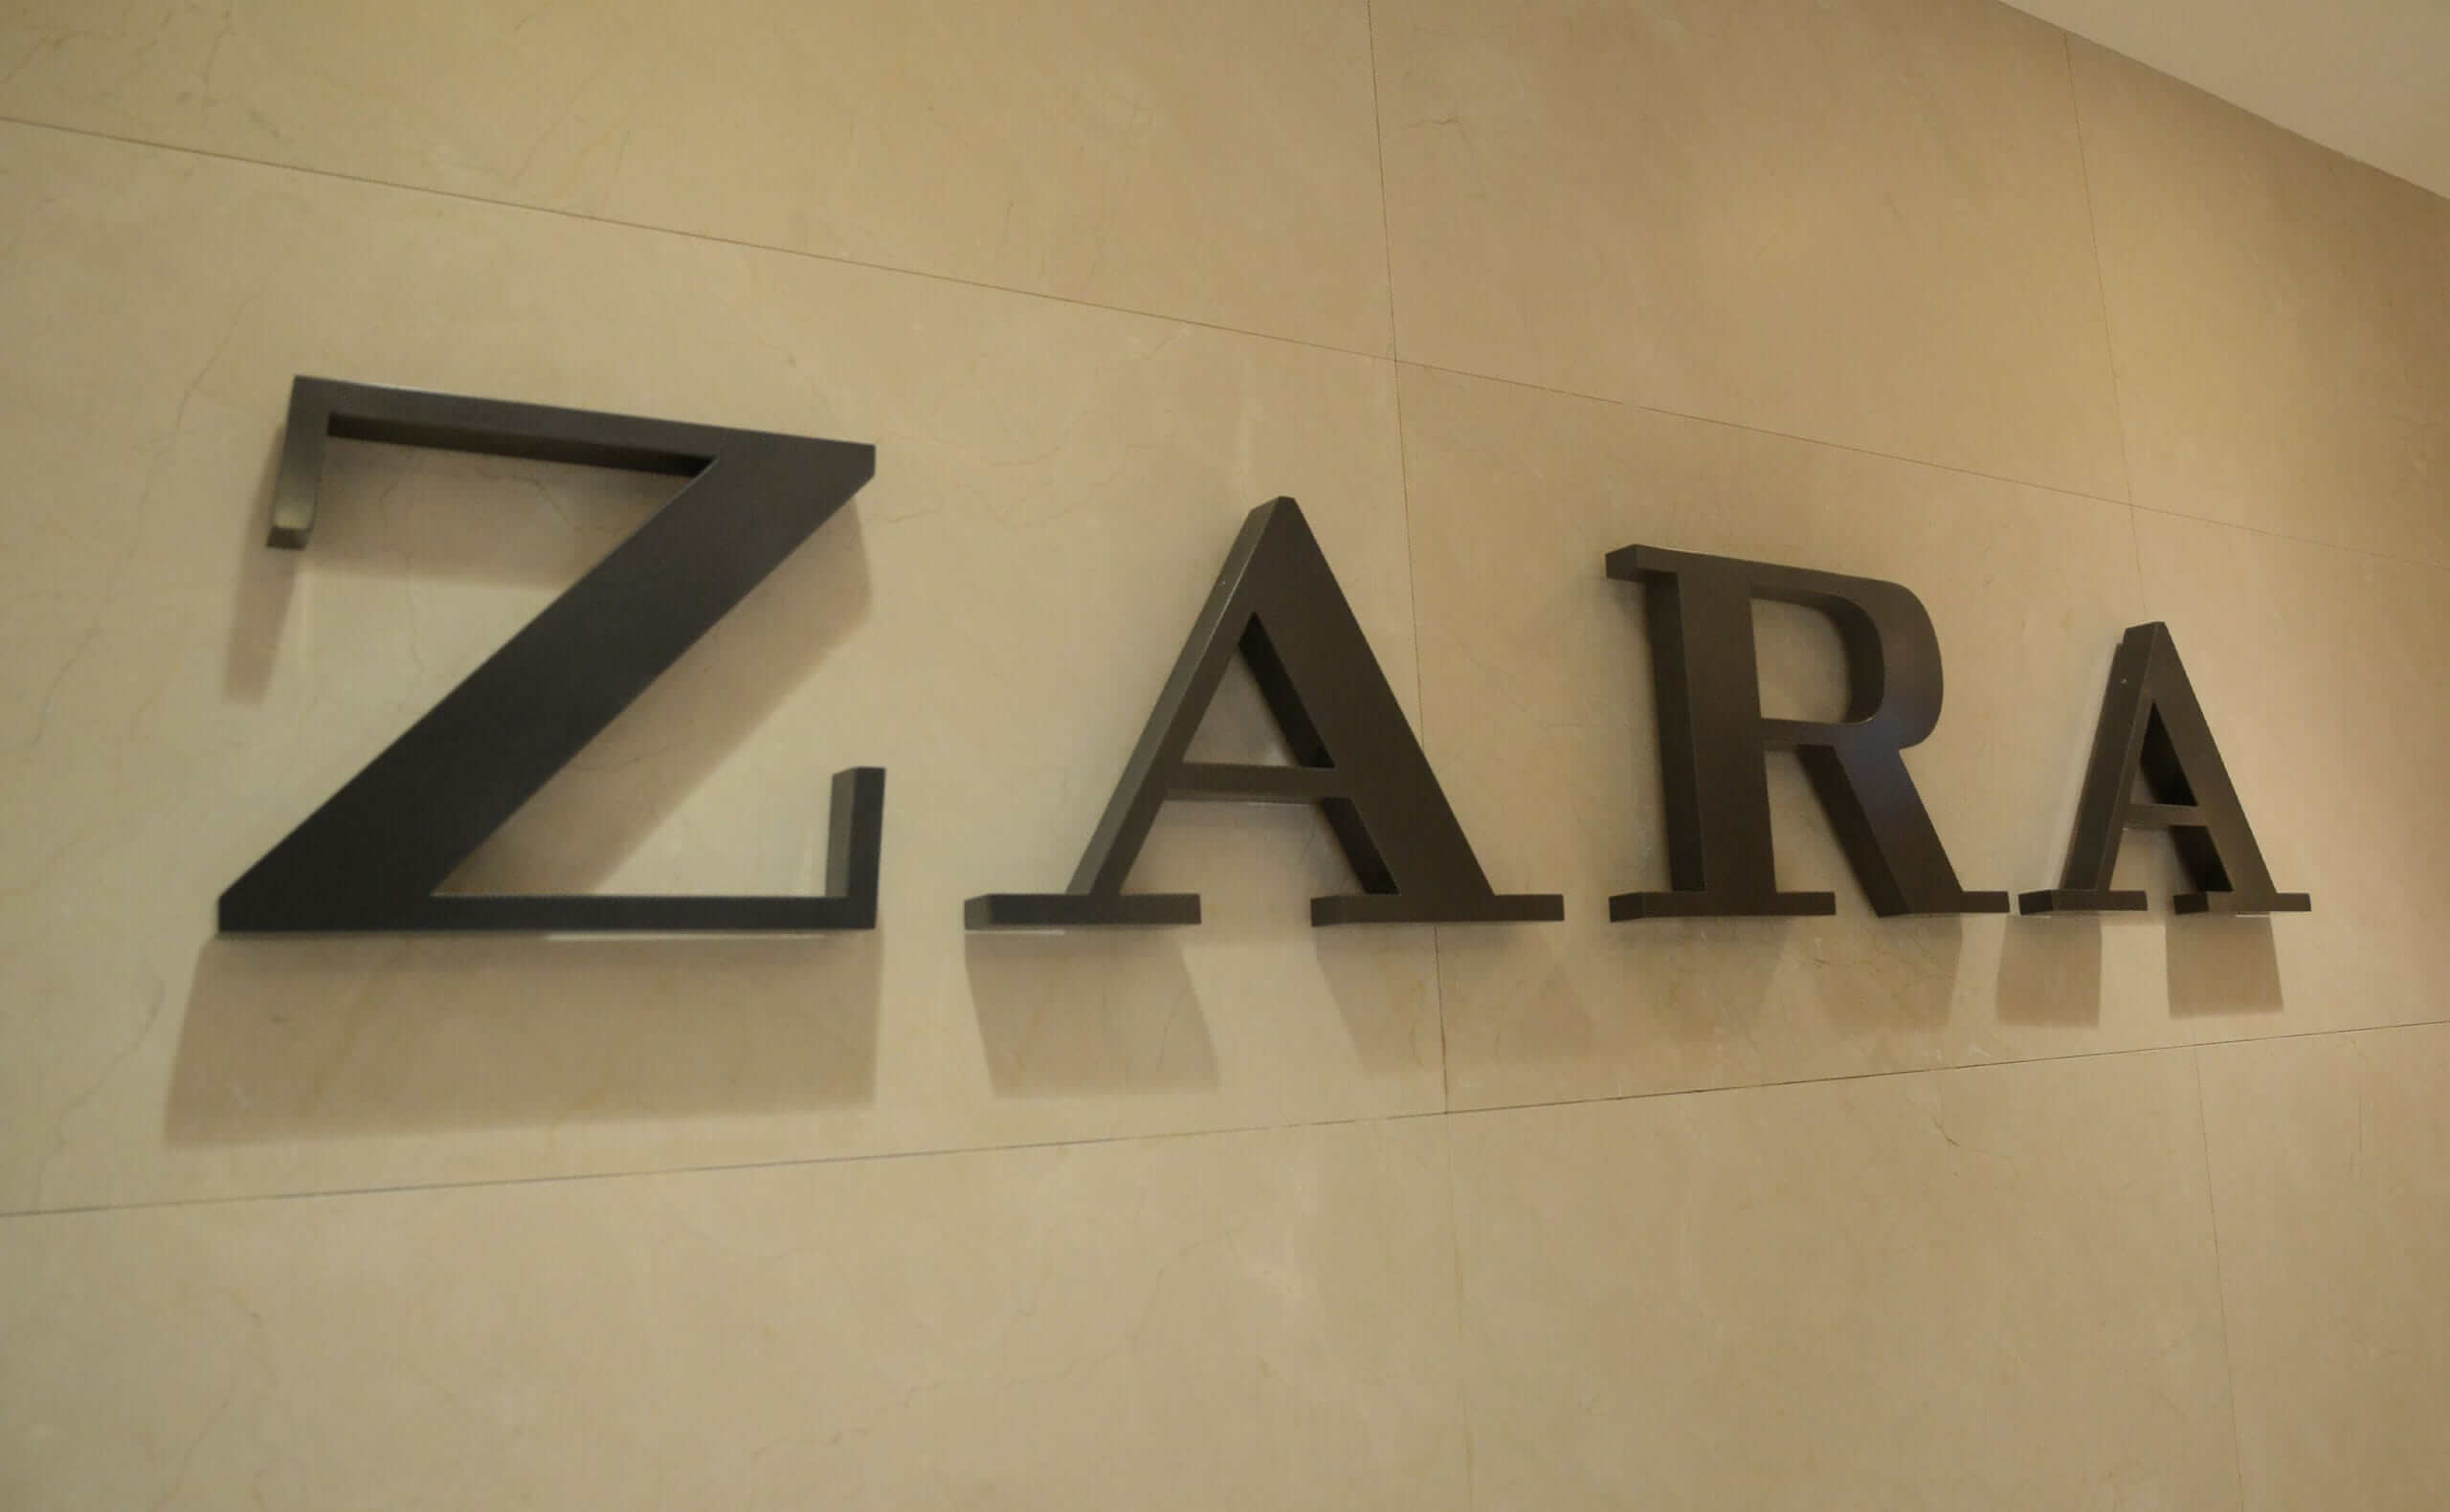 3D Metal Signs For Zara